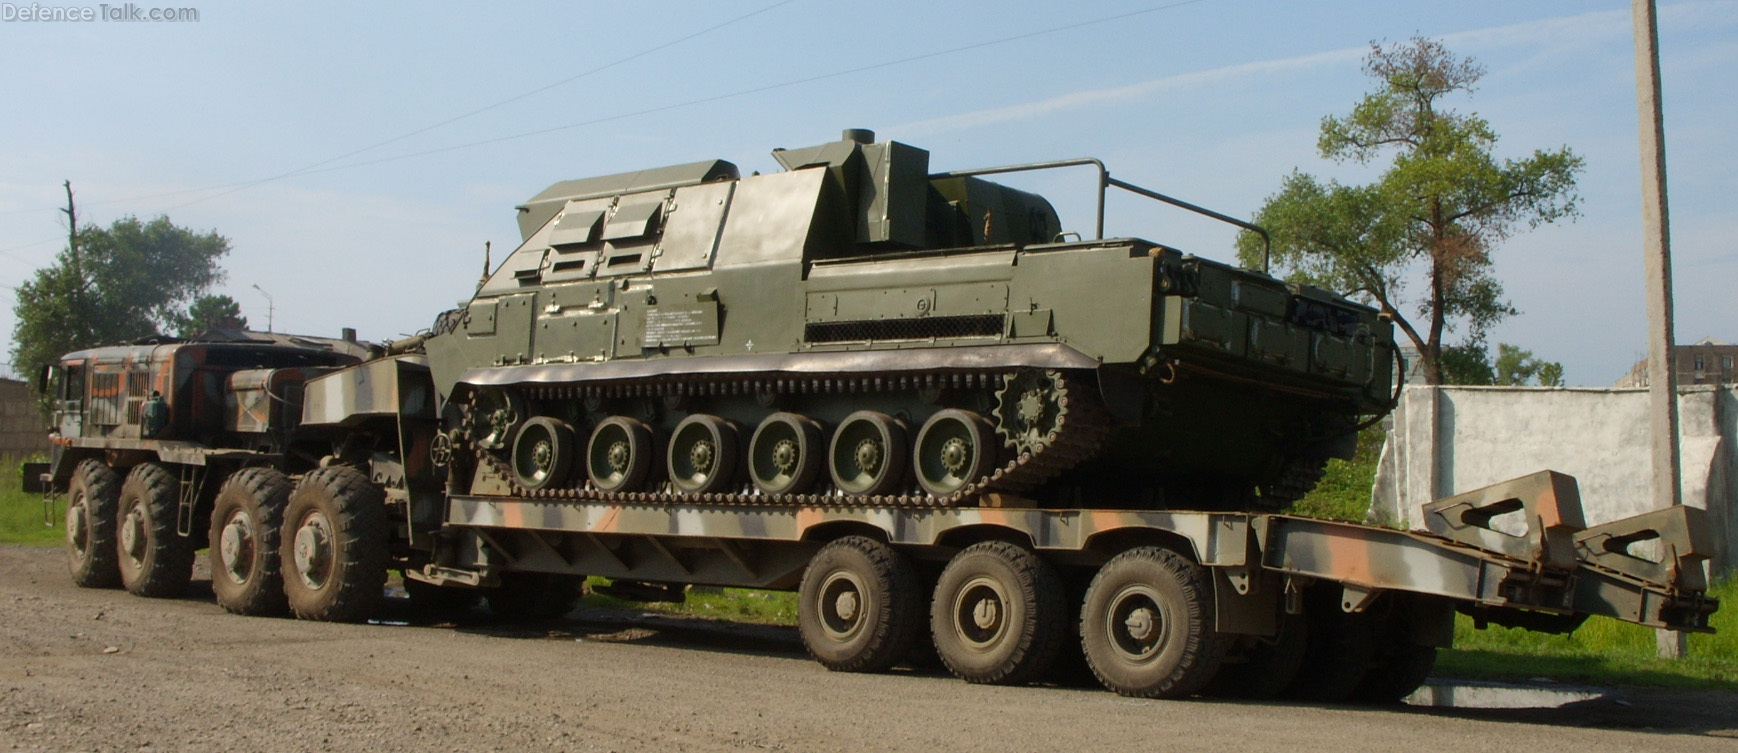 Buk command vehicle 9S70M1